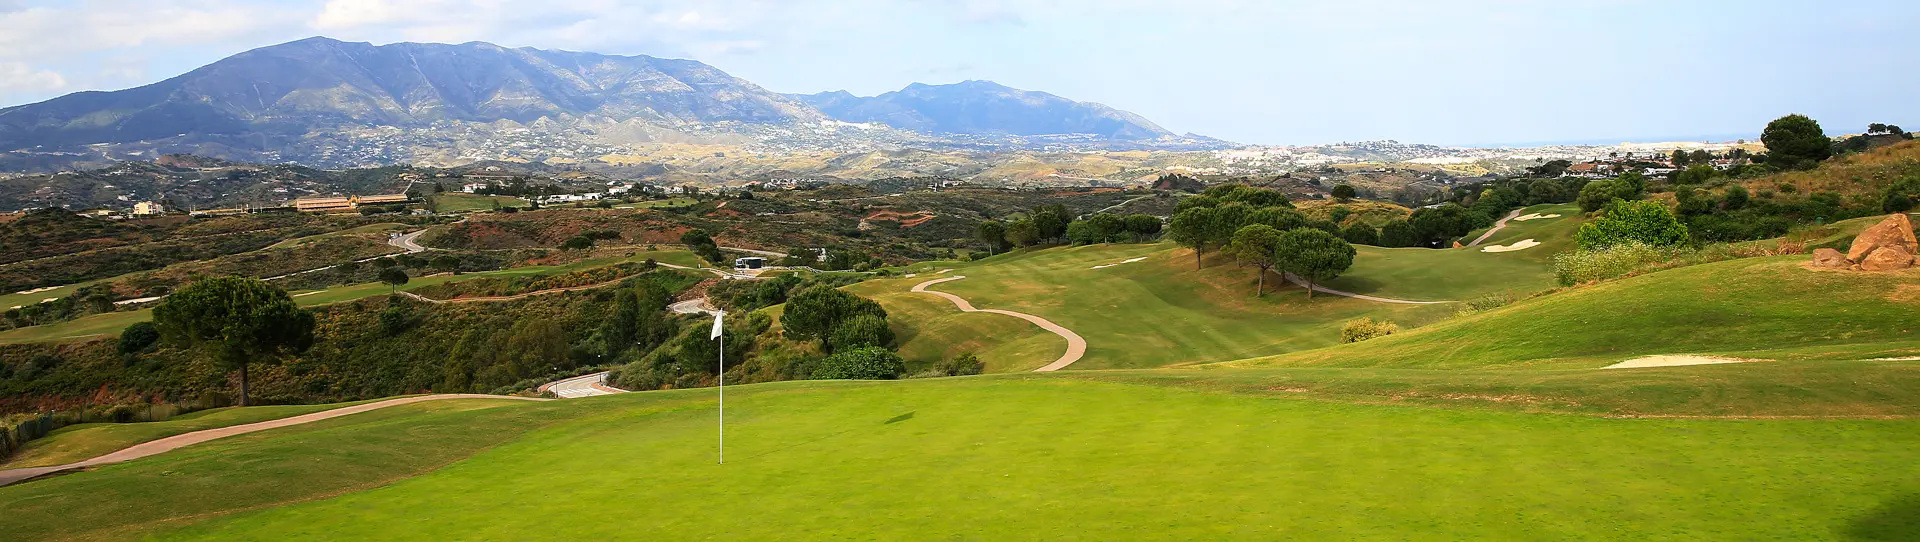 Spain golf courses - La Cala America - Photo 1